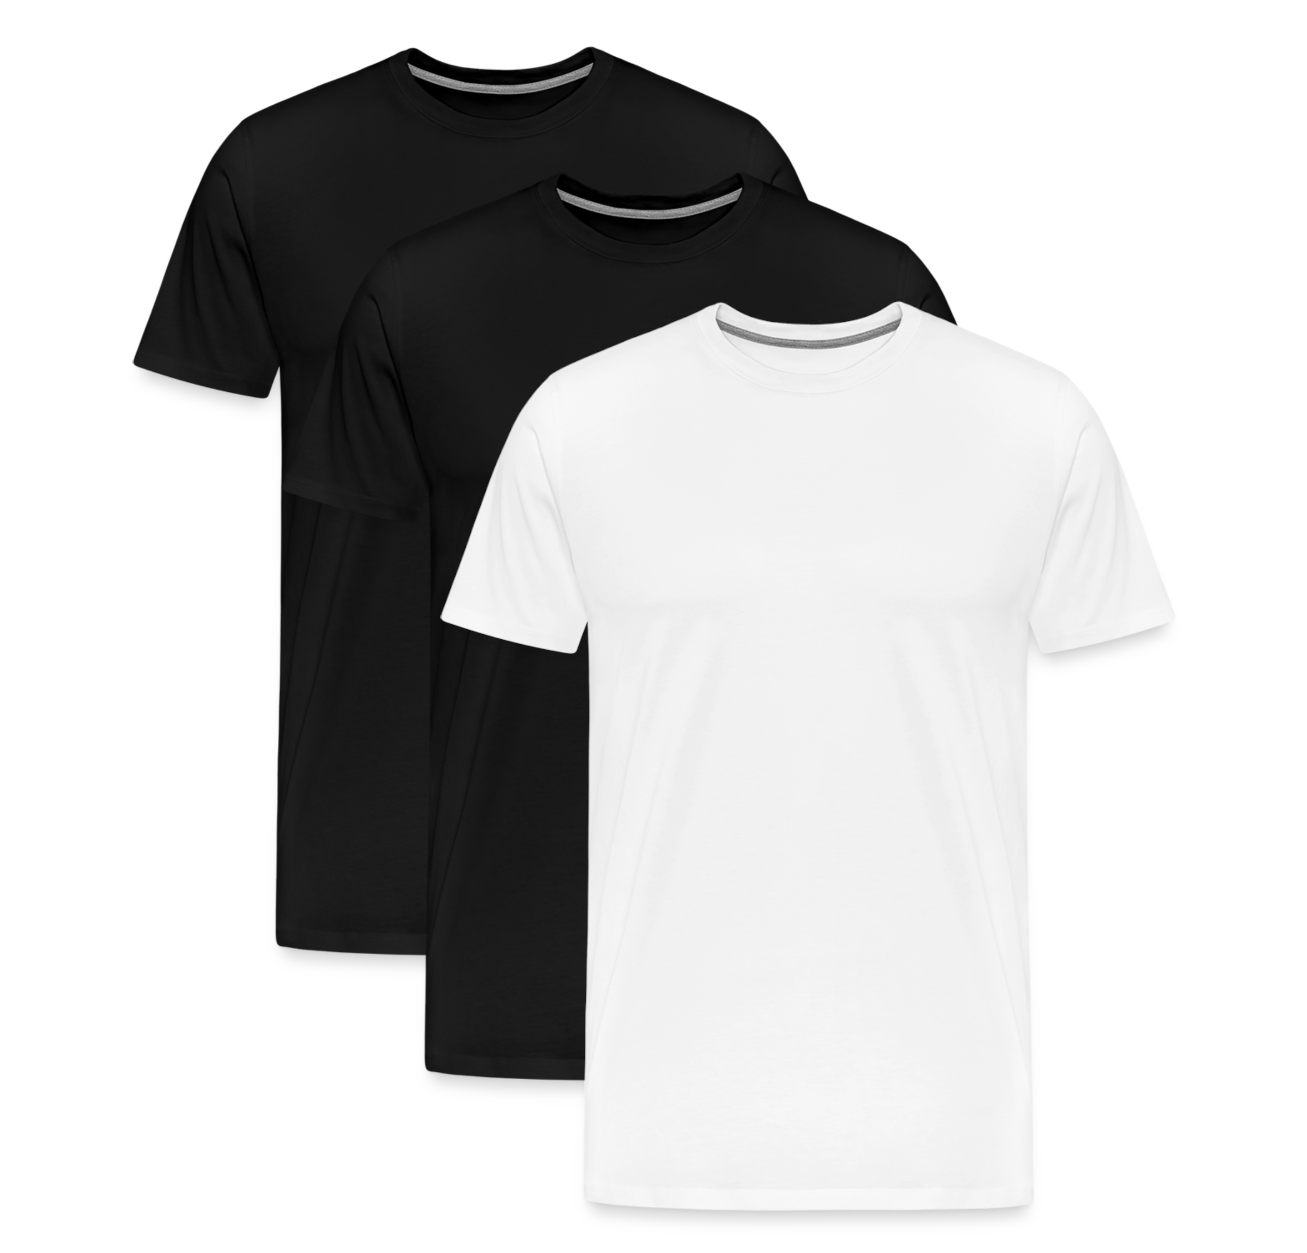 Fluent Tee Variety 3-Pack (Size 3XL) - Men's Premium T-Shirt from fluentclothing.com